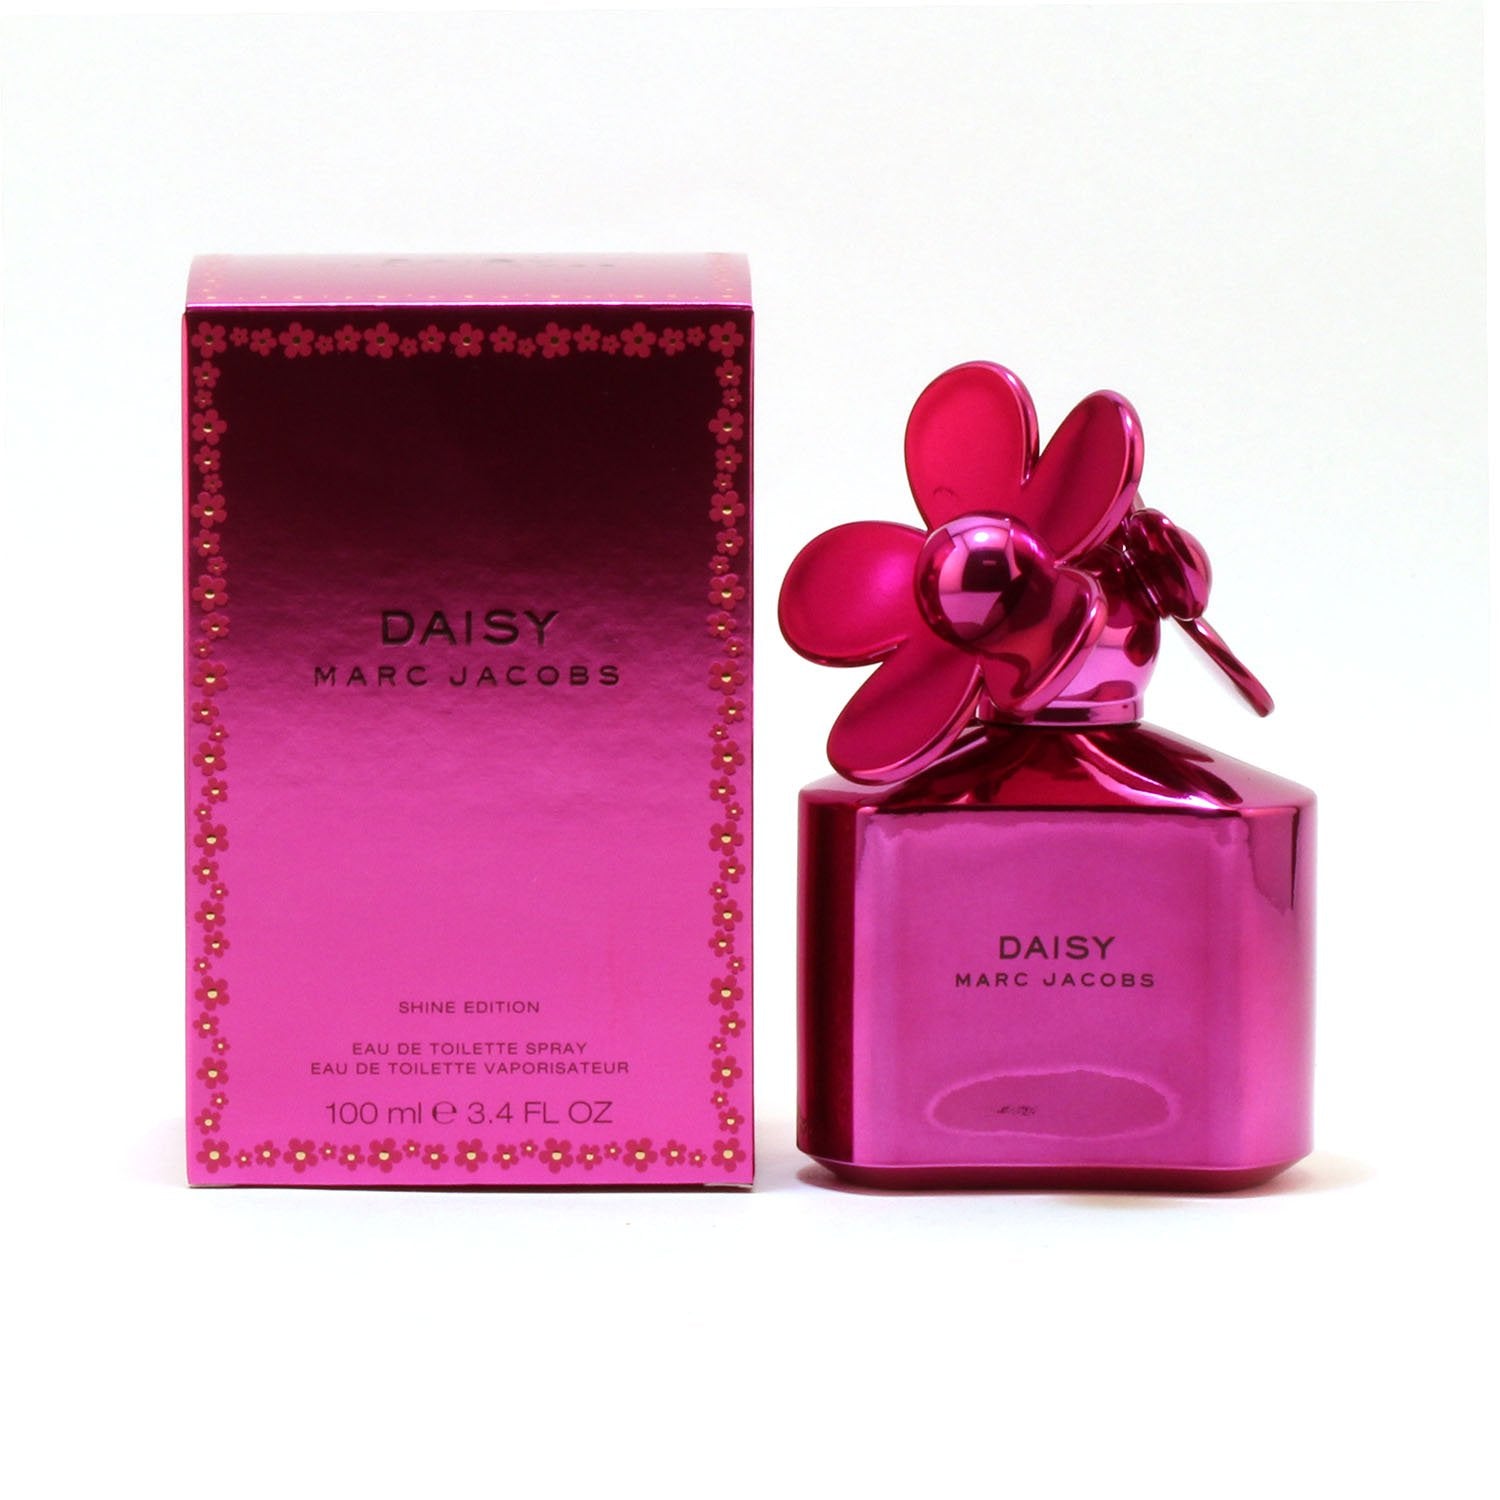 Perfume - MARC JACOBS DAISY SHINE PINK EDITION FOR WOMEN - EAU DE TOILETTE SPRAY, 3.4 OZ